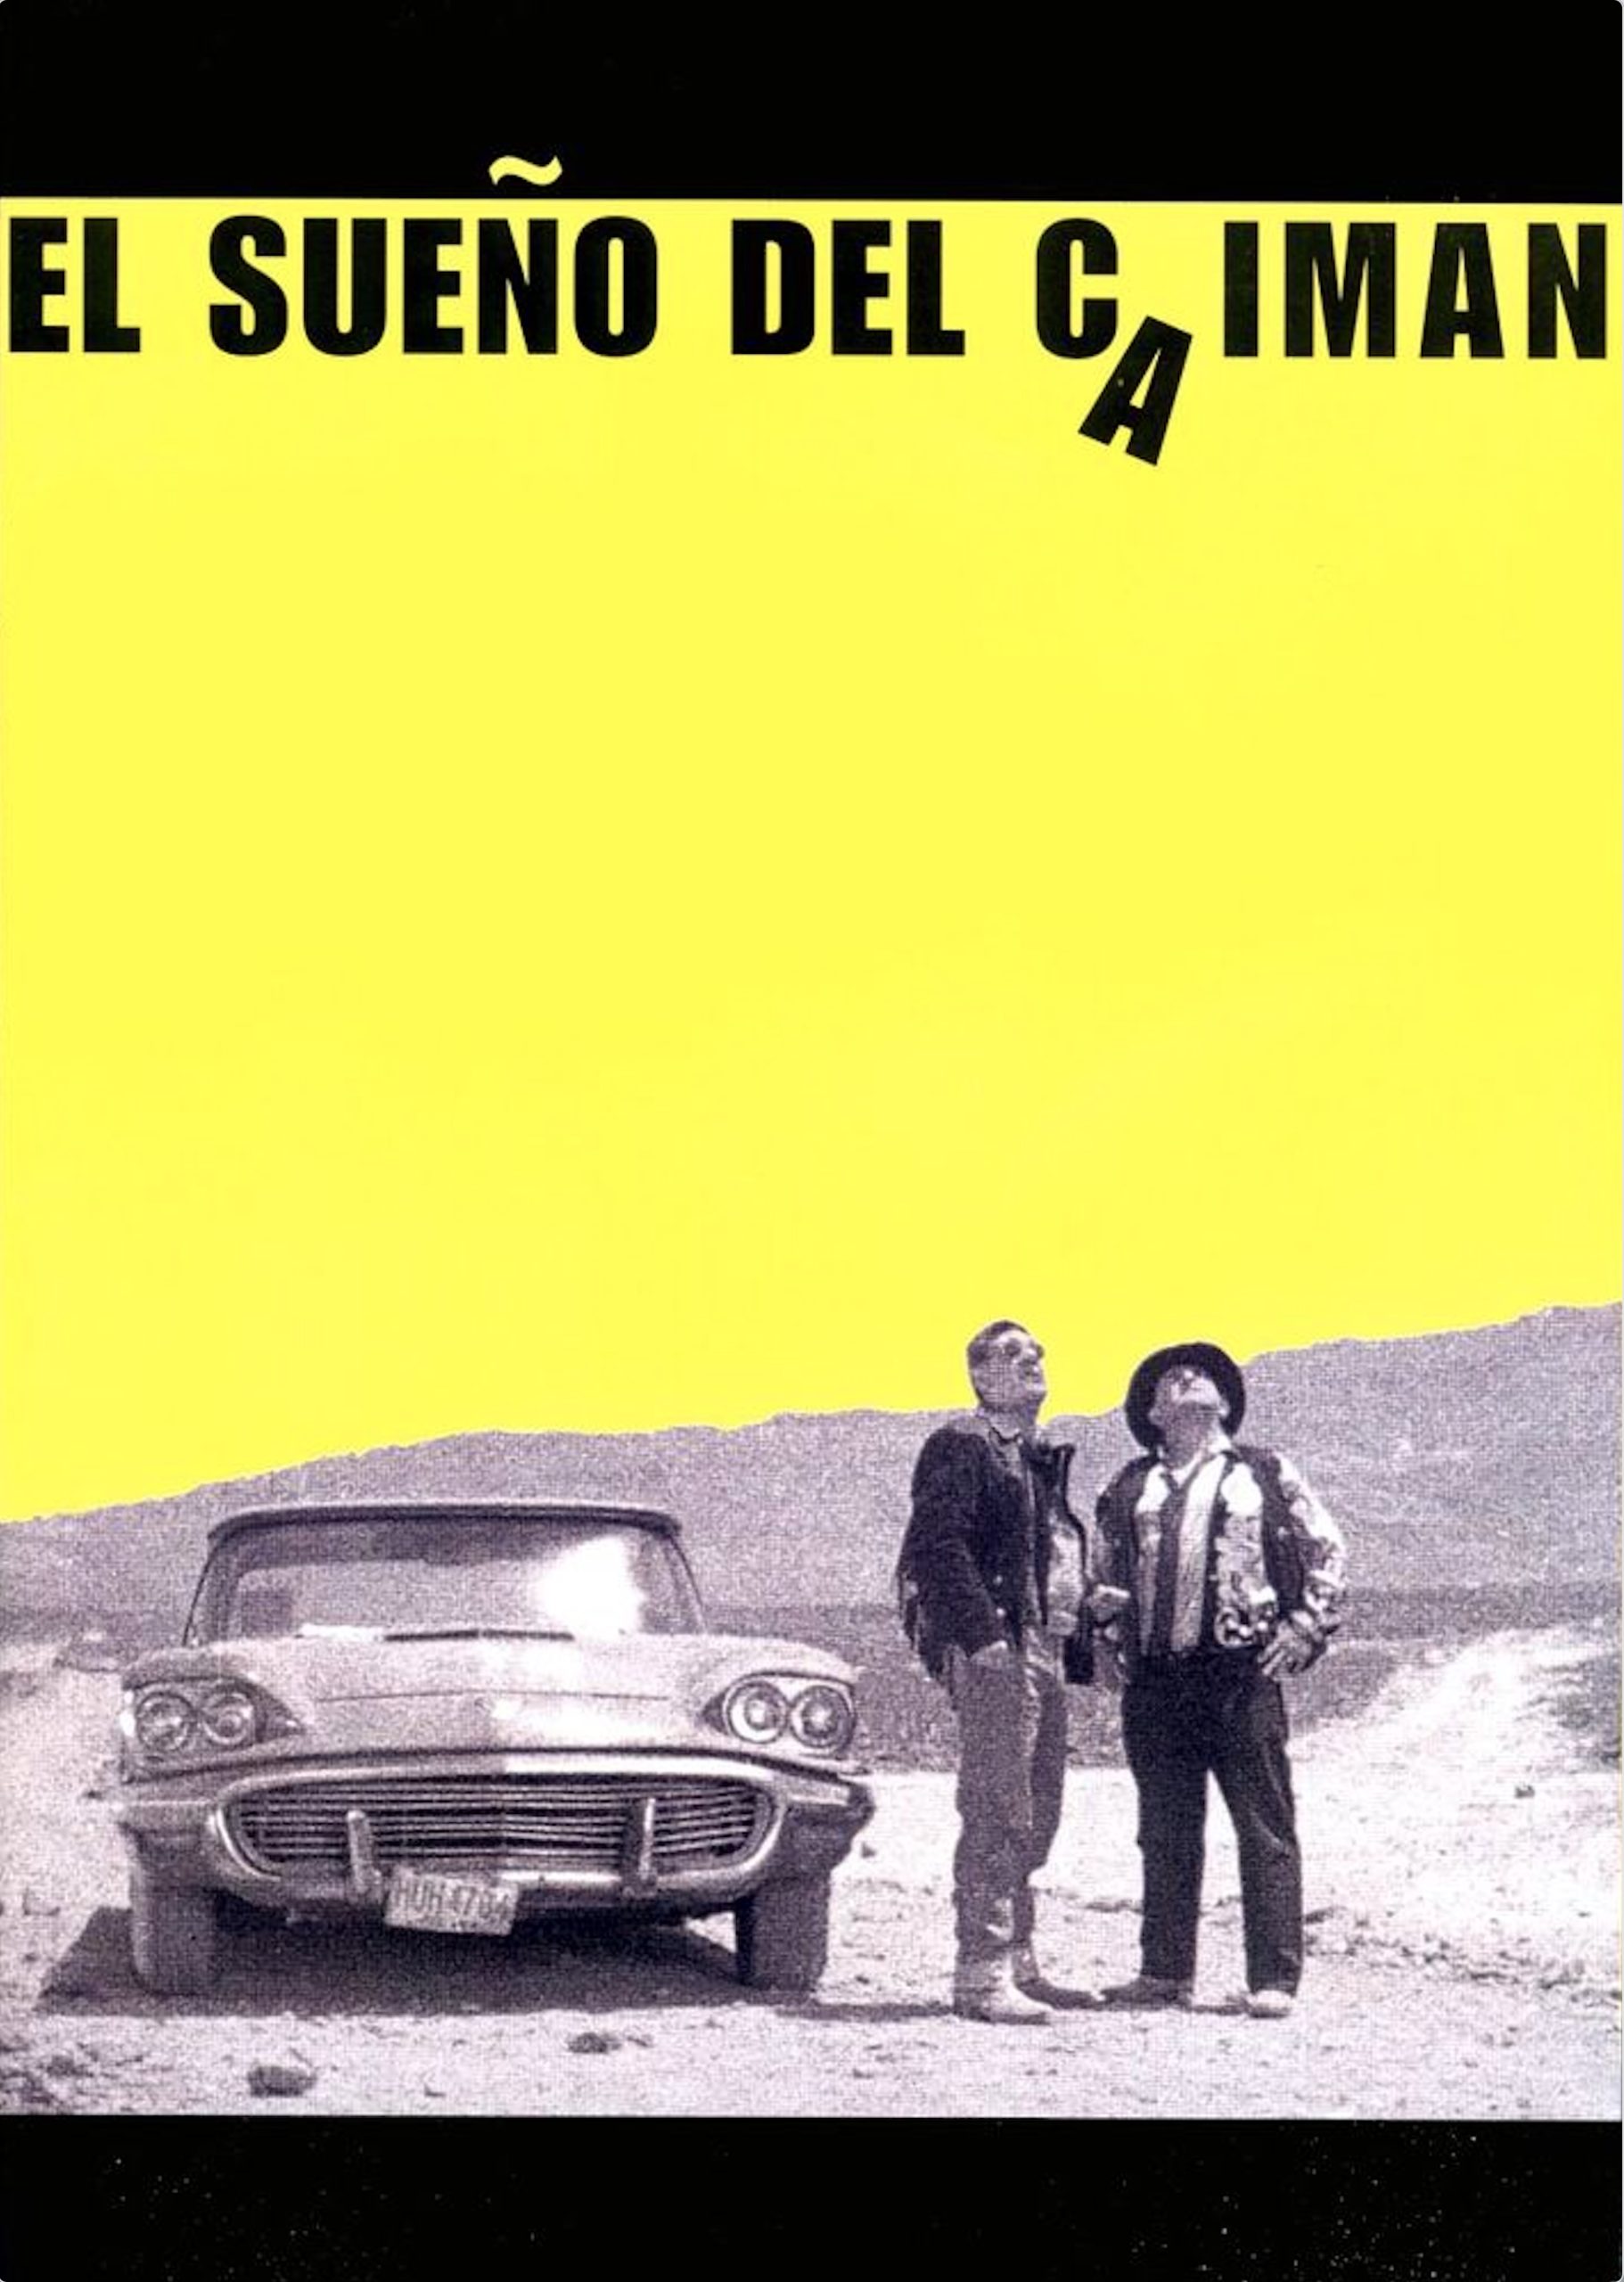 El Sueño del Caimán (BSO) - Poster